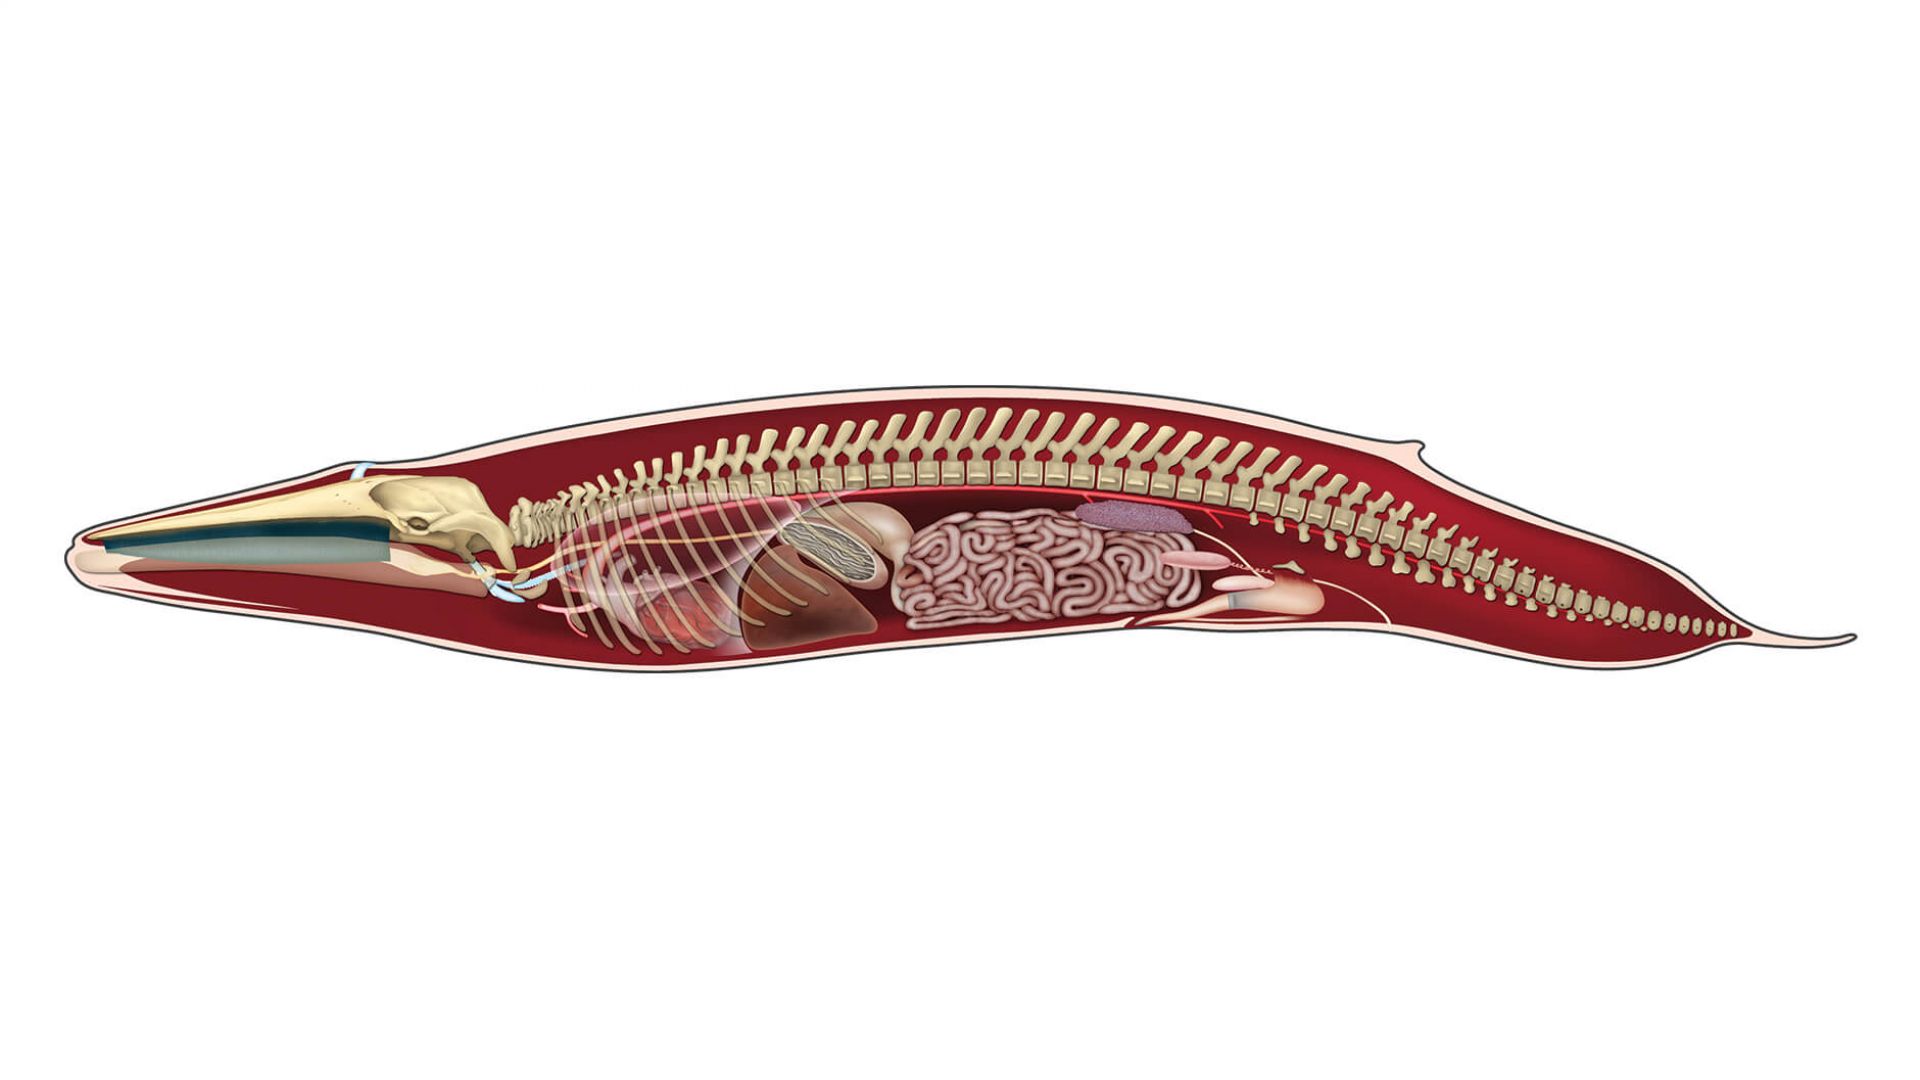 Blue whale anatomy illustration.